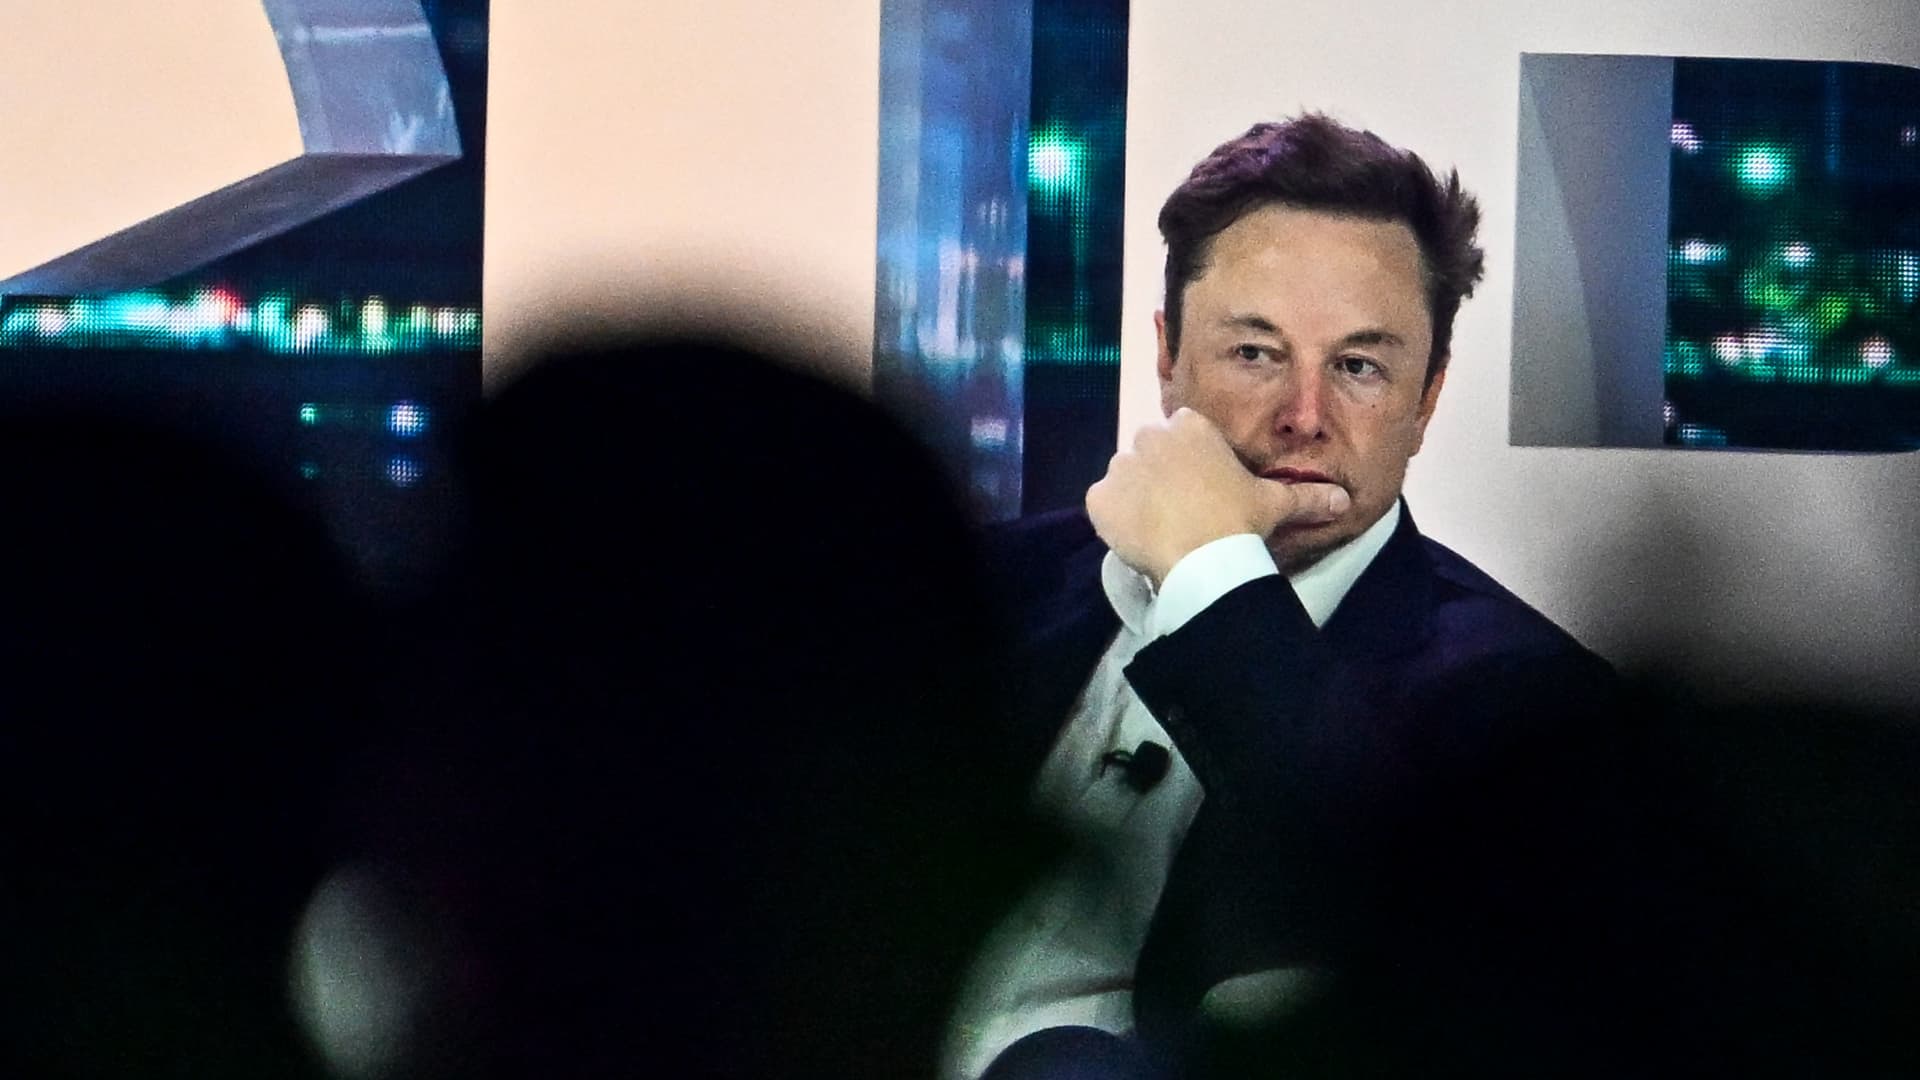 Elon Musk met with Schumer to discuss A.I. regulation